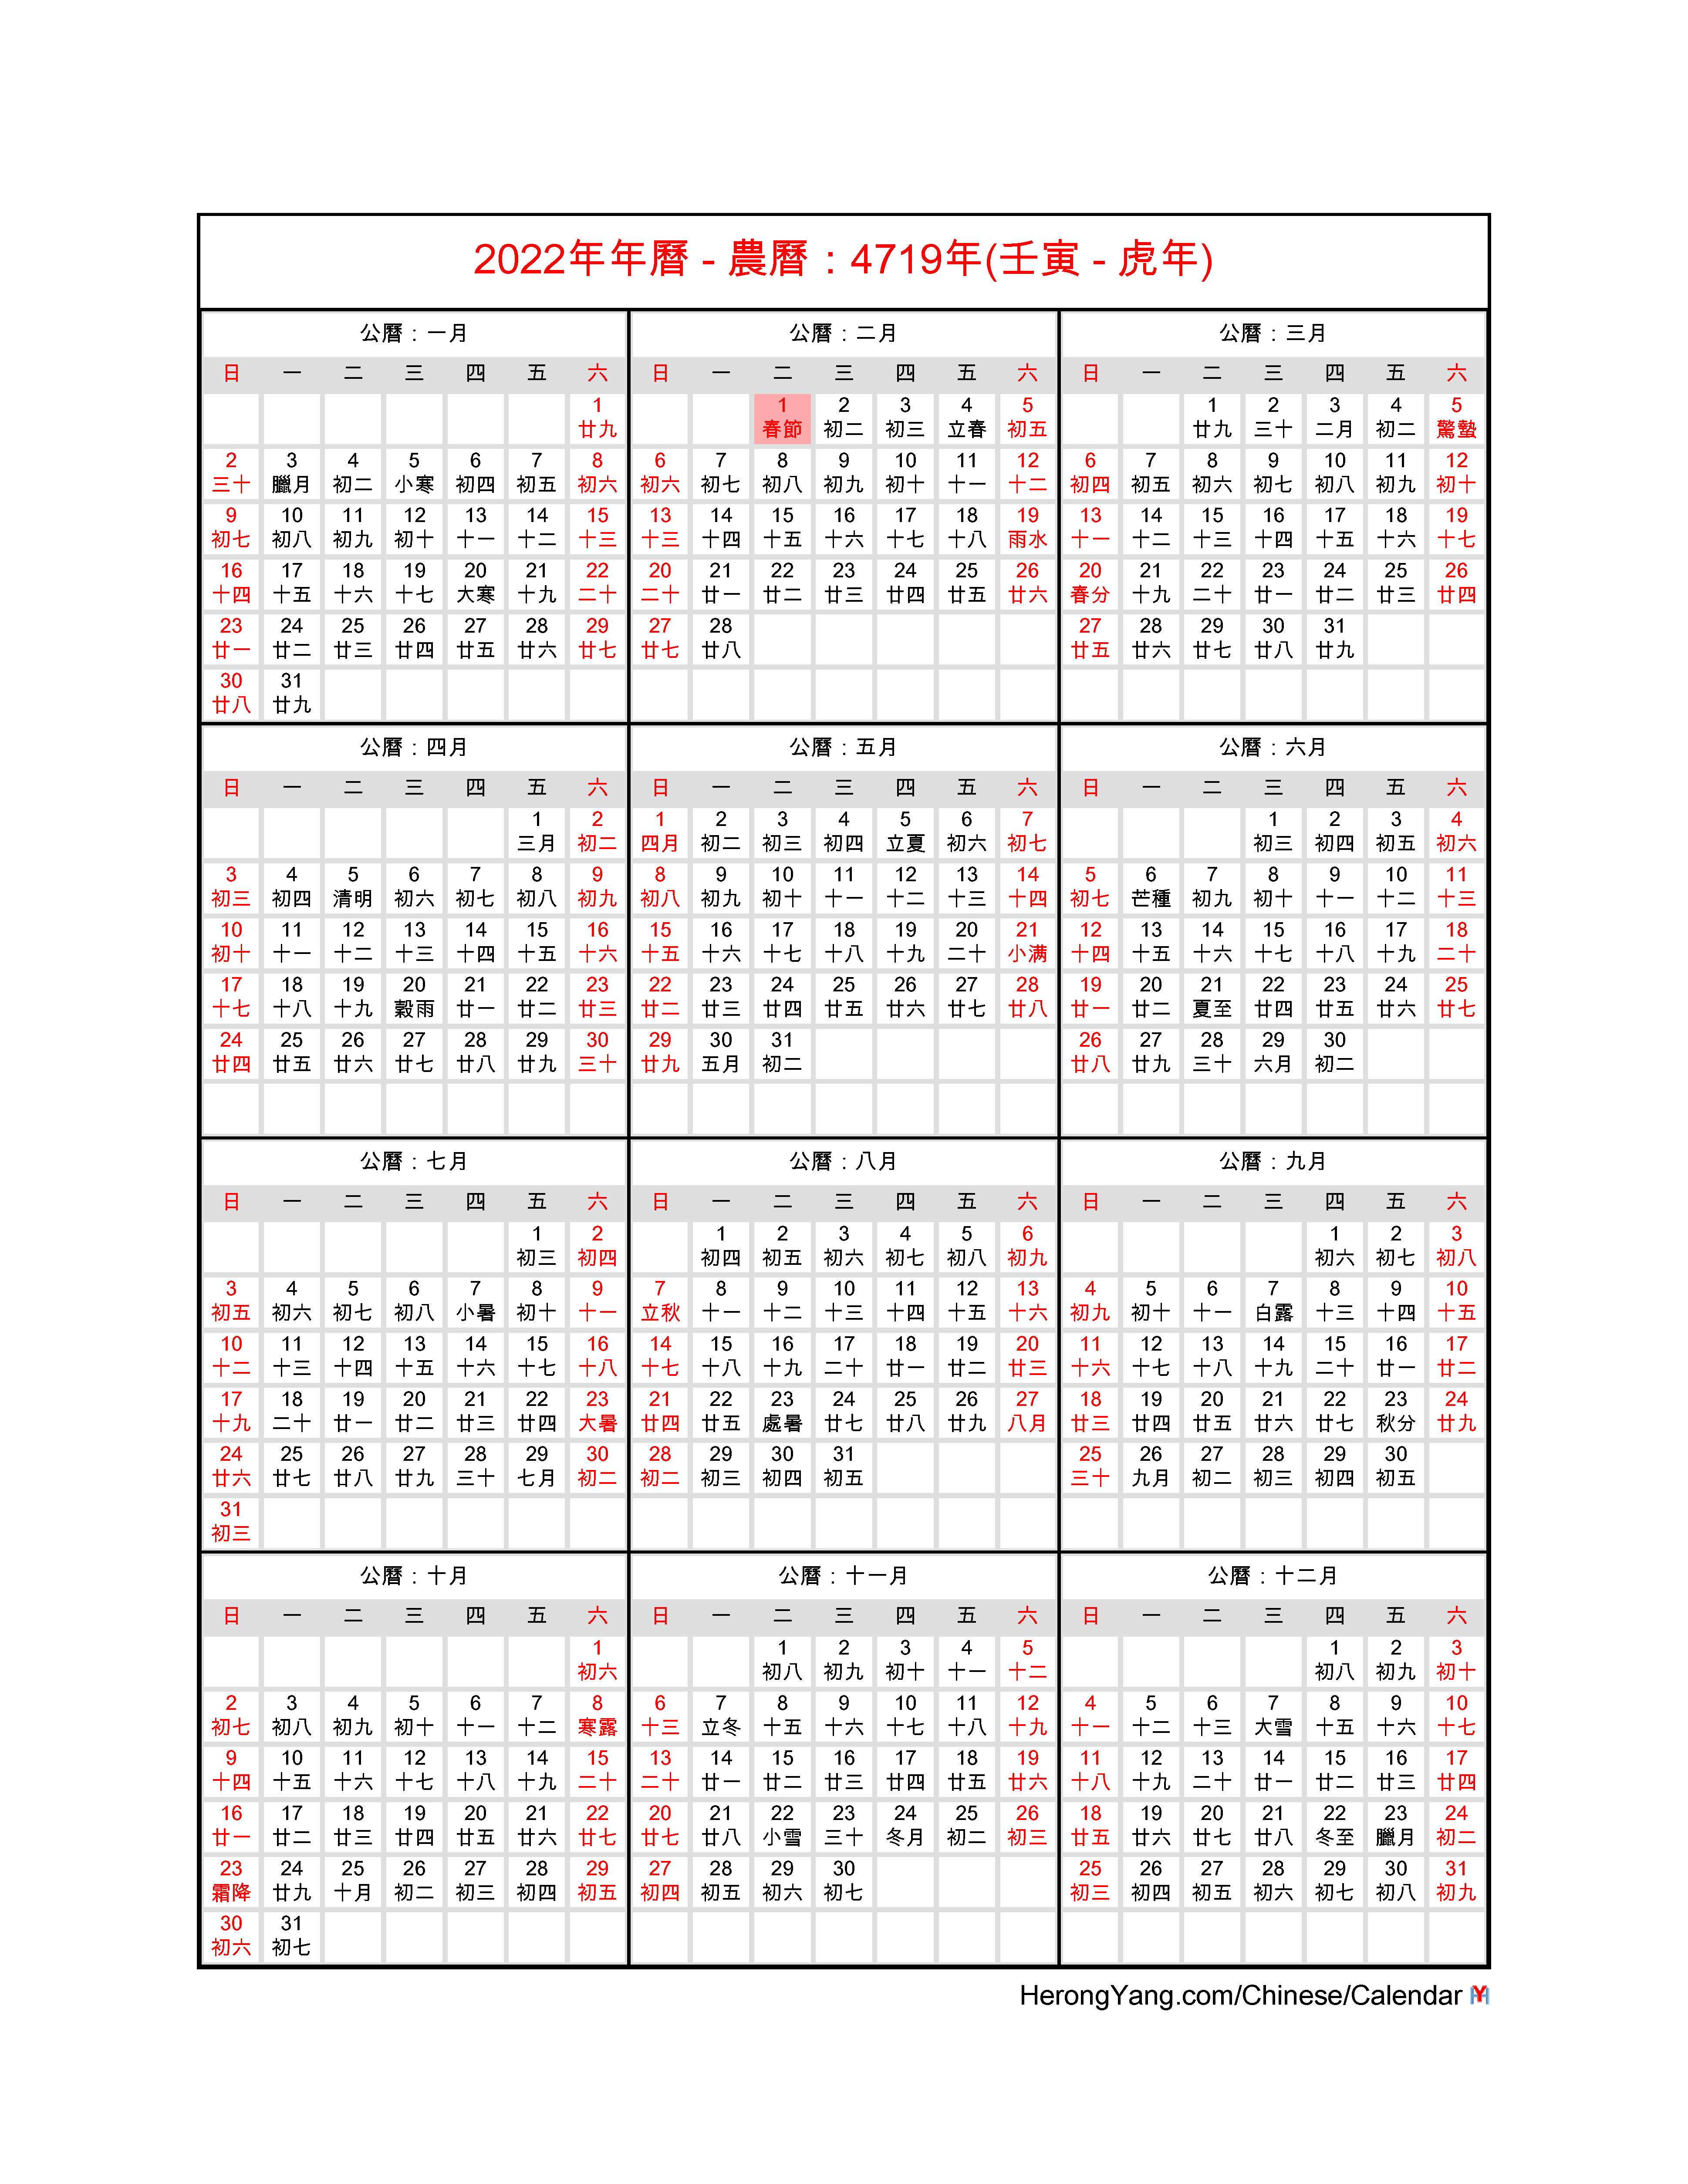 Lunar Calendar Conversion 2022 Free Chinese Calendar 2022 - Year Of The Tiger